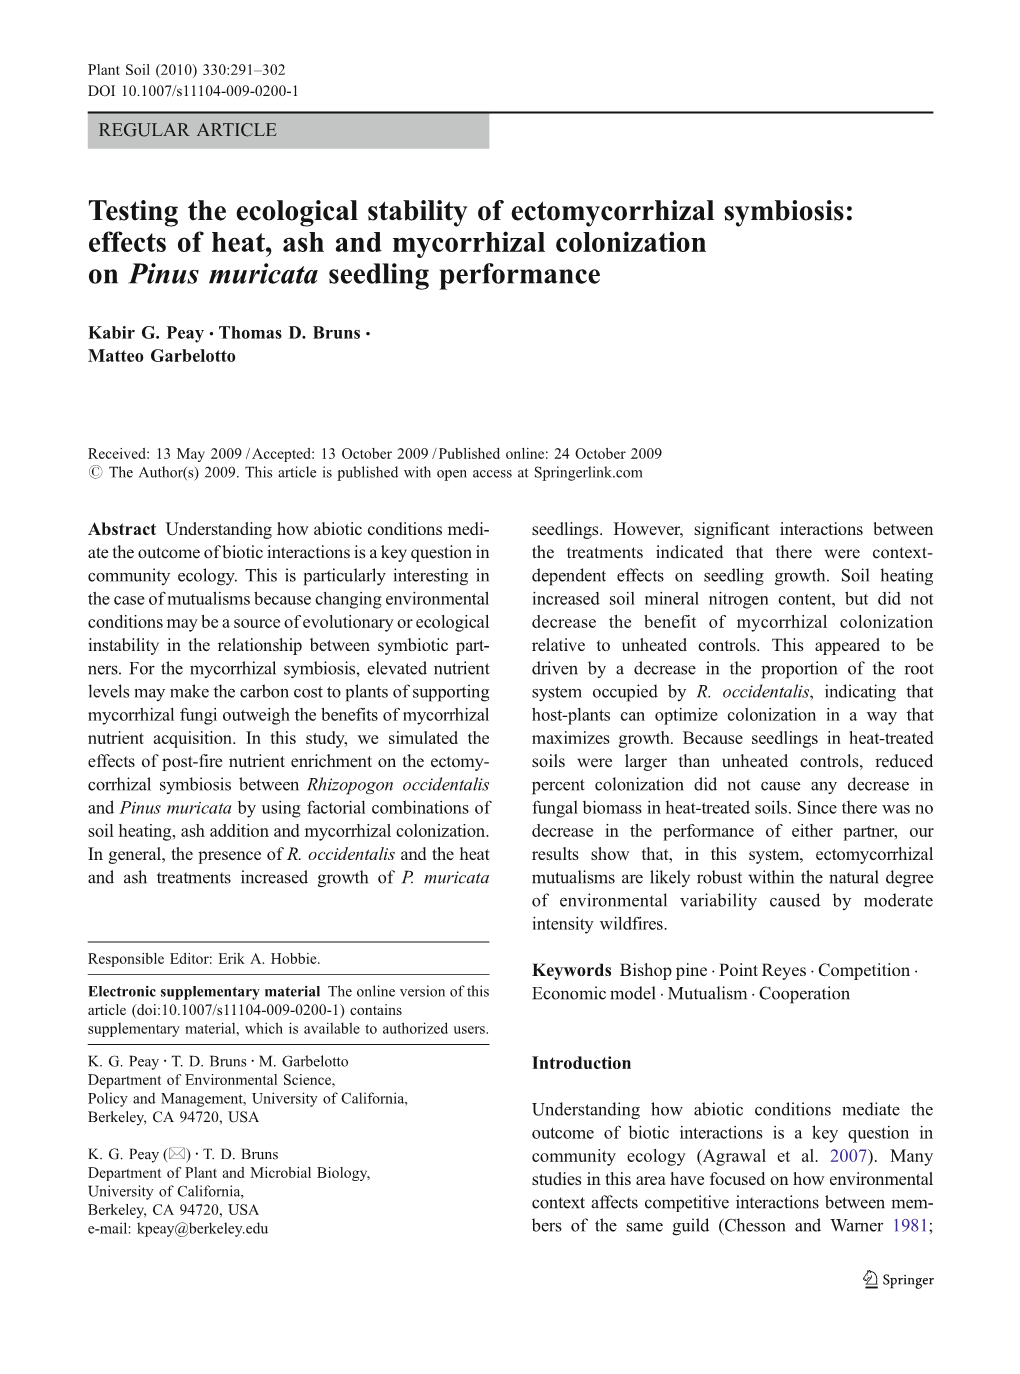 Testing the Ecological Stability of Ectomycorrhizal Symbiosis: Effects of Heat, Ash and Mycorrhizal Colonization on Pinus Muricata Seedling Performance